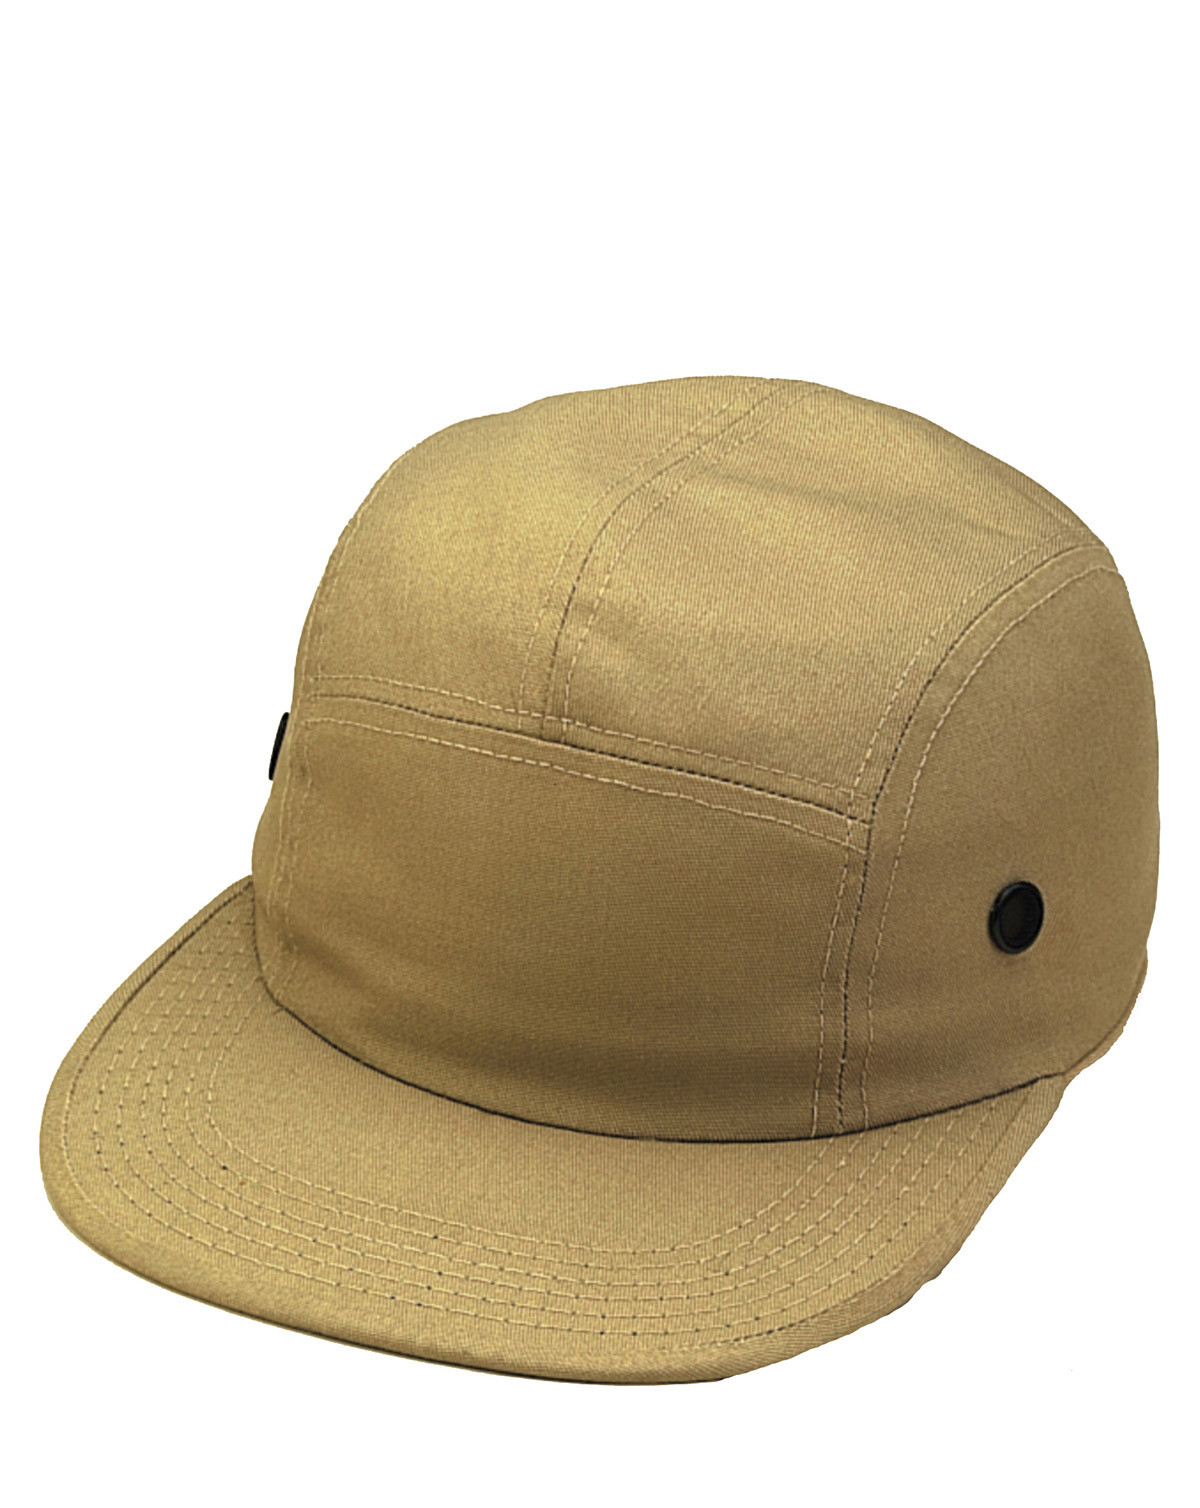 8: Rothco 5 Panel Military Street Cap (Khaki, One Size)